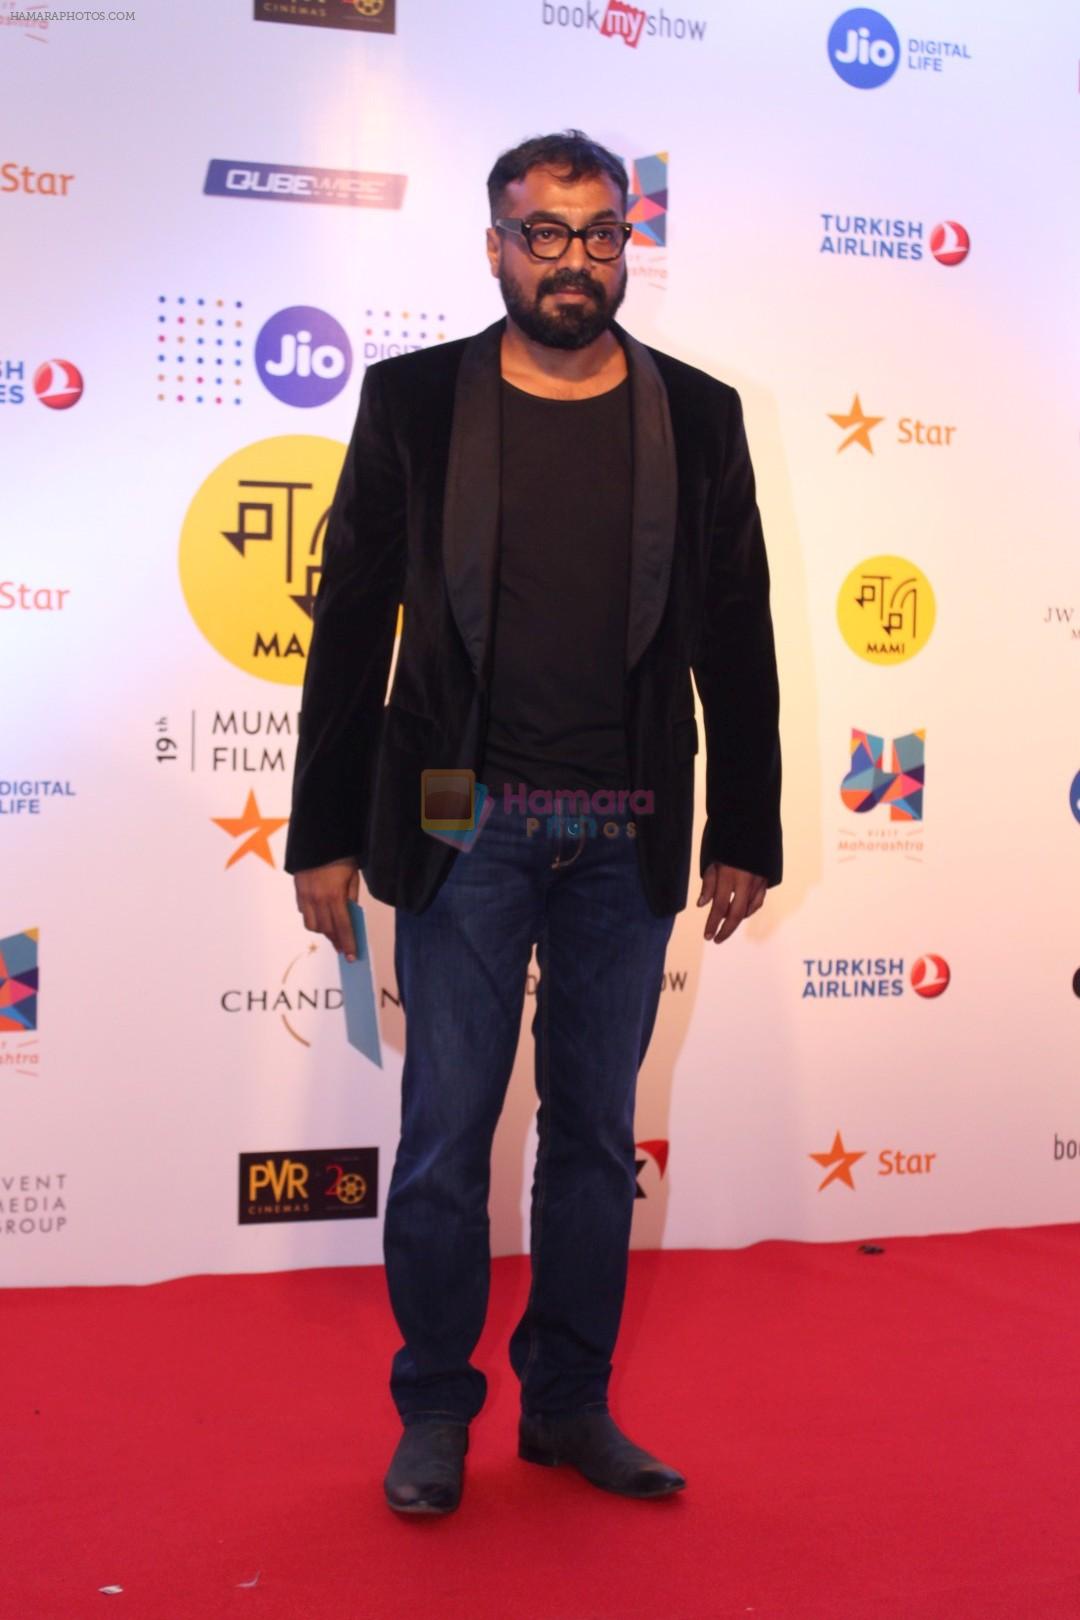 Anurag Kashyap at Mami Movie Mela 2017 on 12th Oct 2017